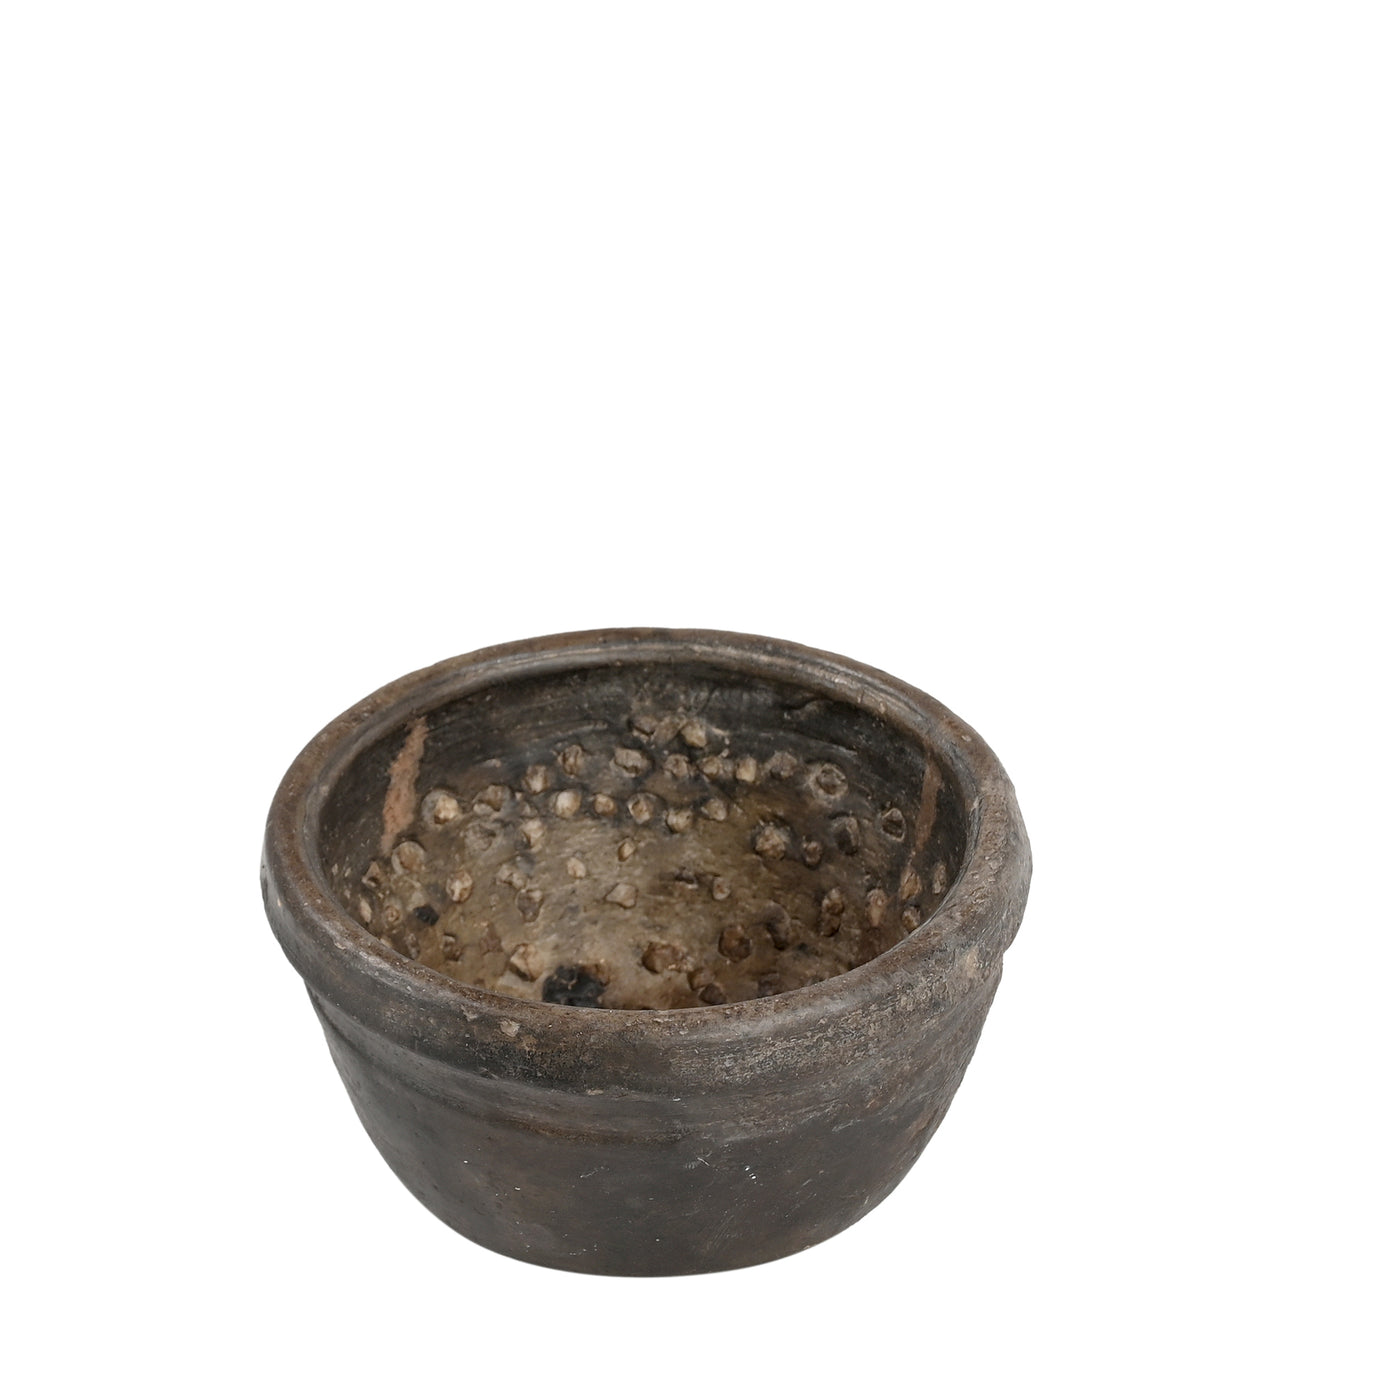 Jesar - Ceramic mortar